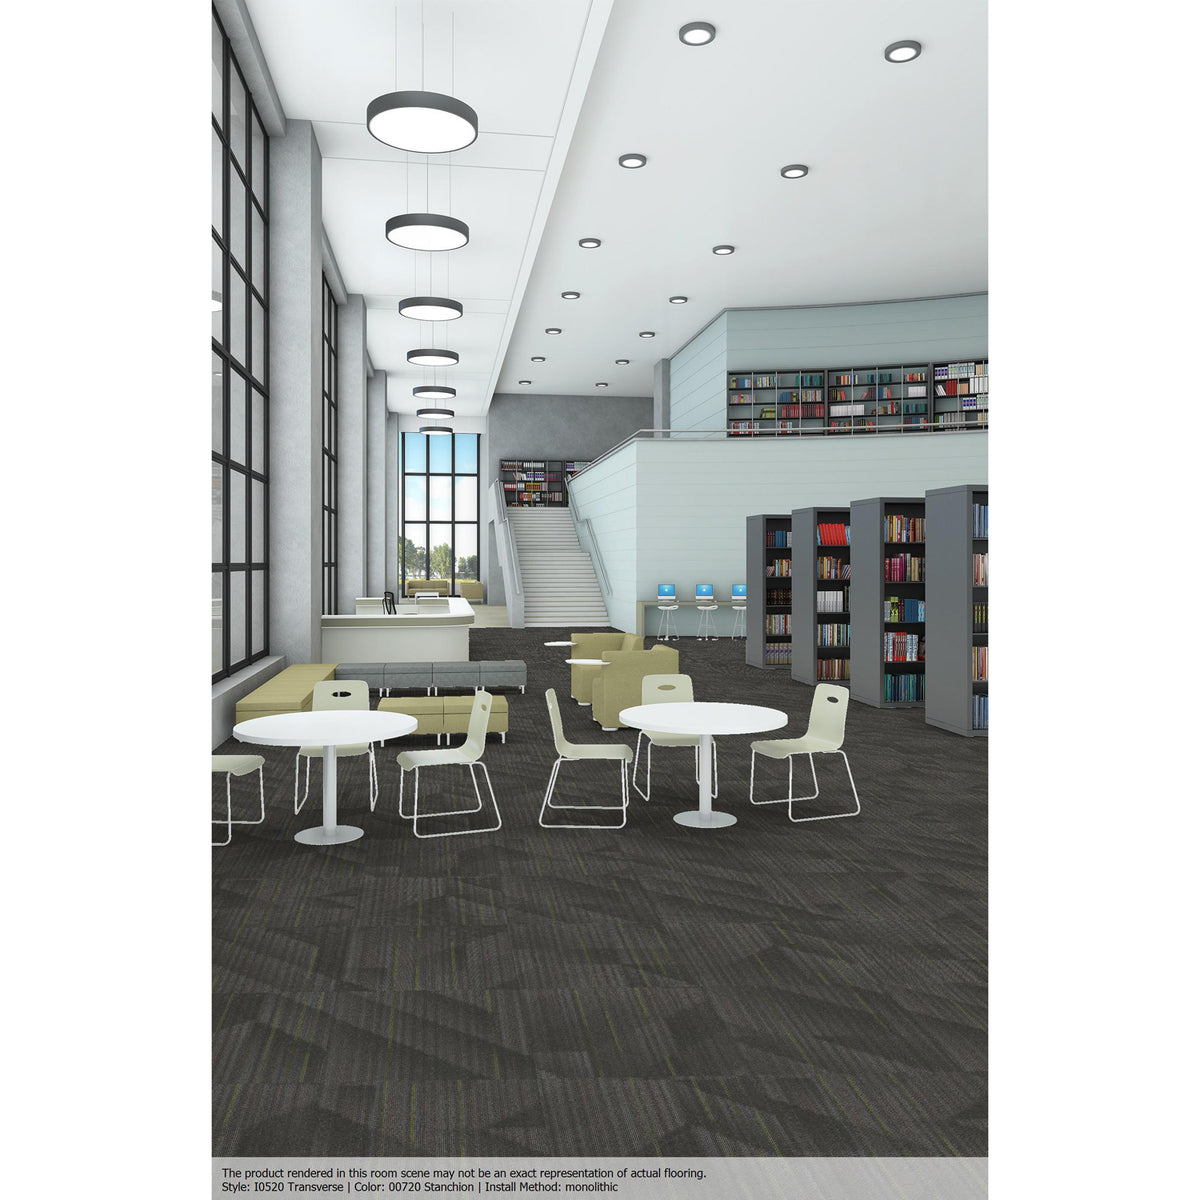 Patcraft - Infrastructure Collection - Transverse Commercial Carpet Tile - Stanchion